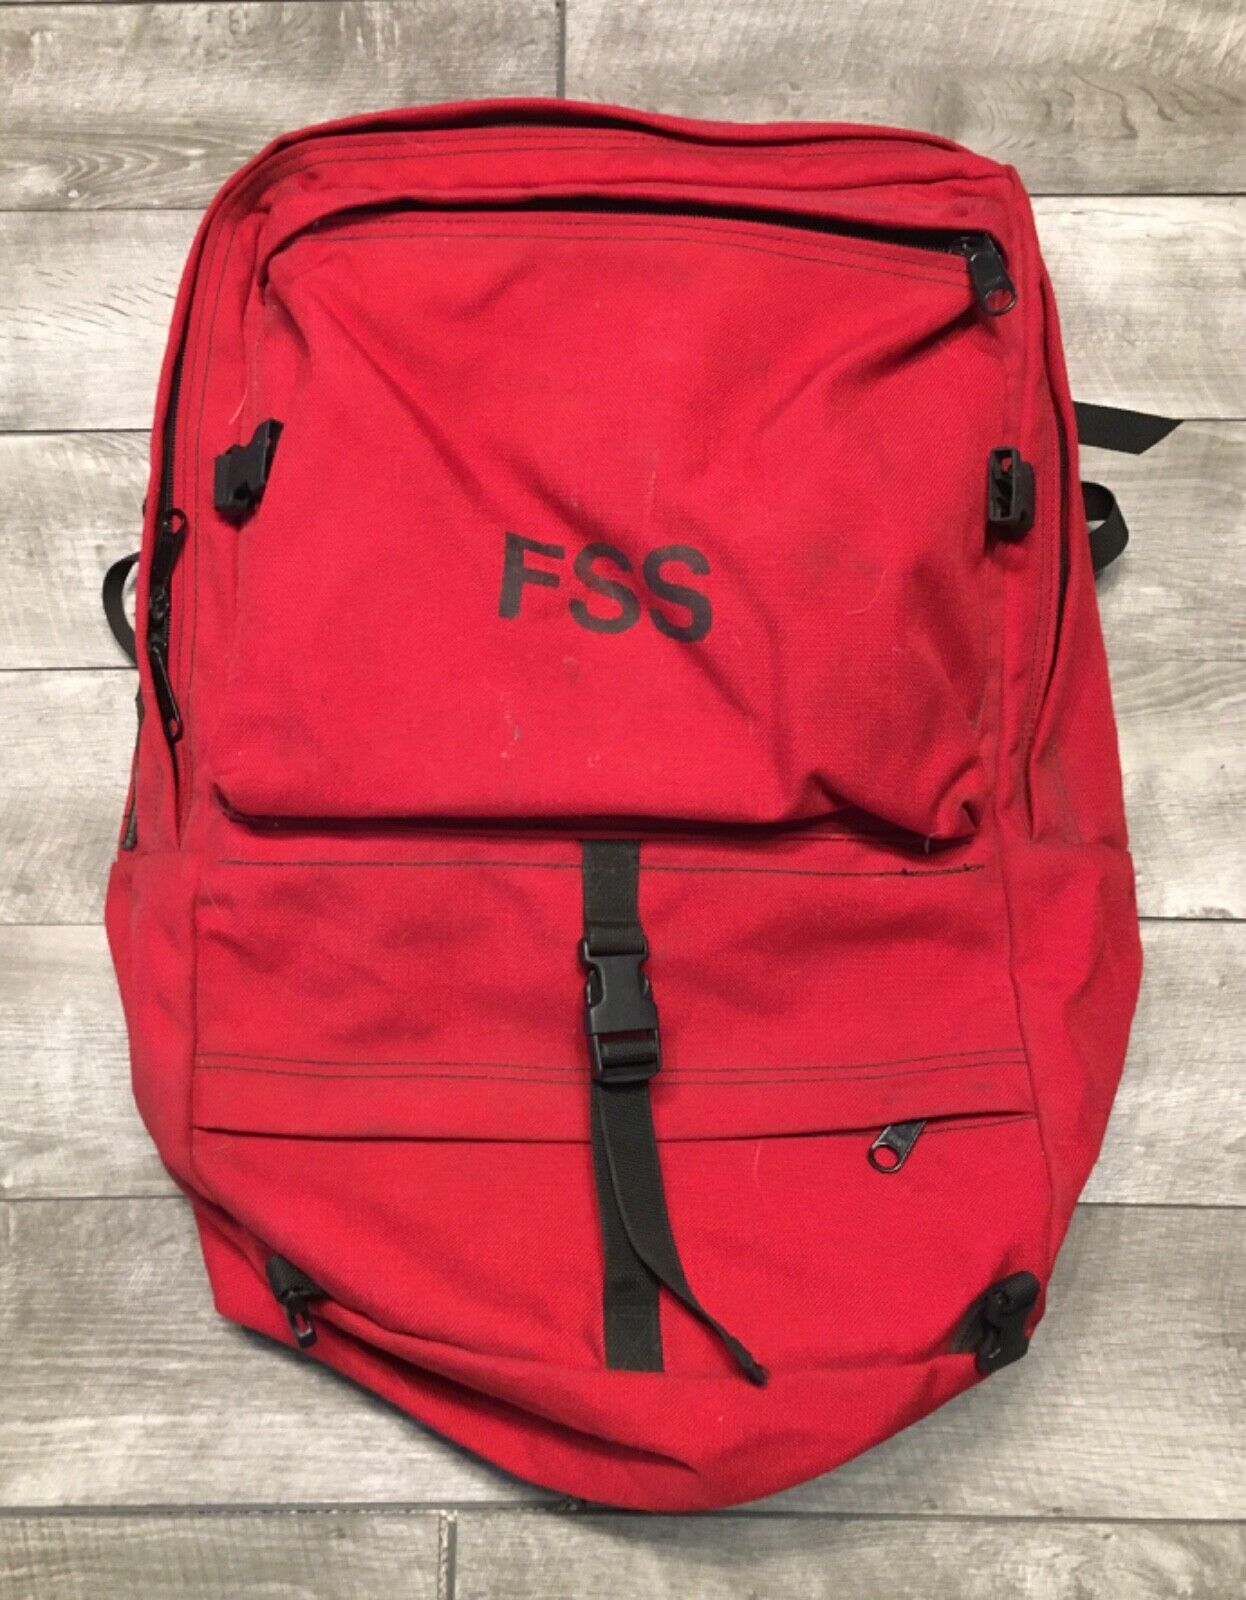 Vtg Red Fss Forest Service Personal Wildland Fire Fighter Backpack Rucksac Bag